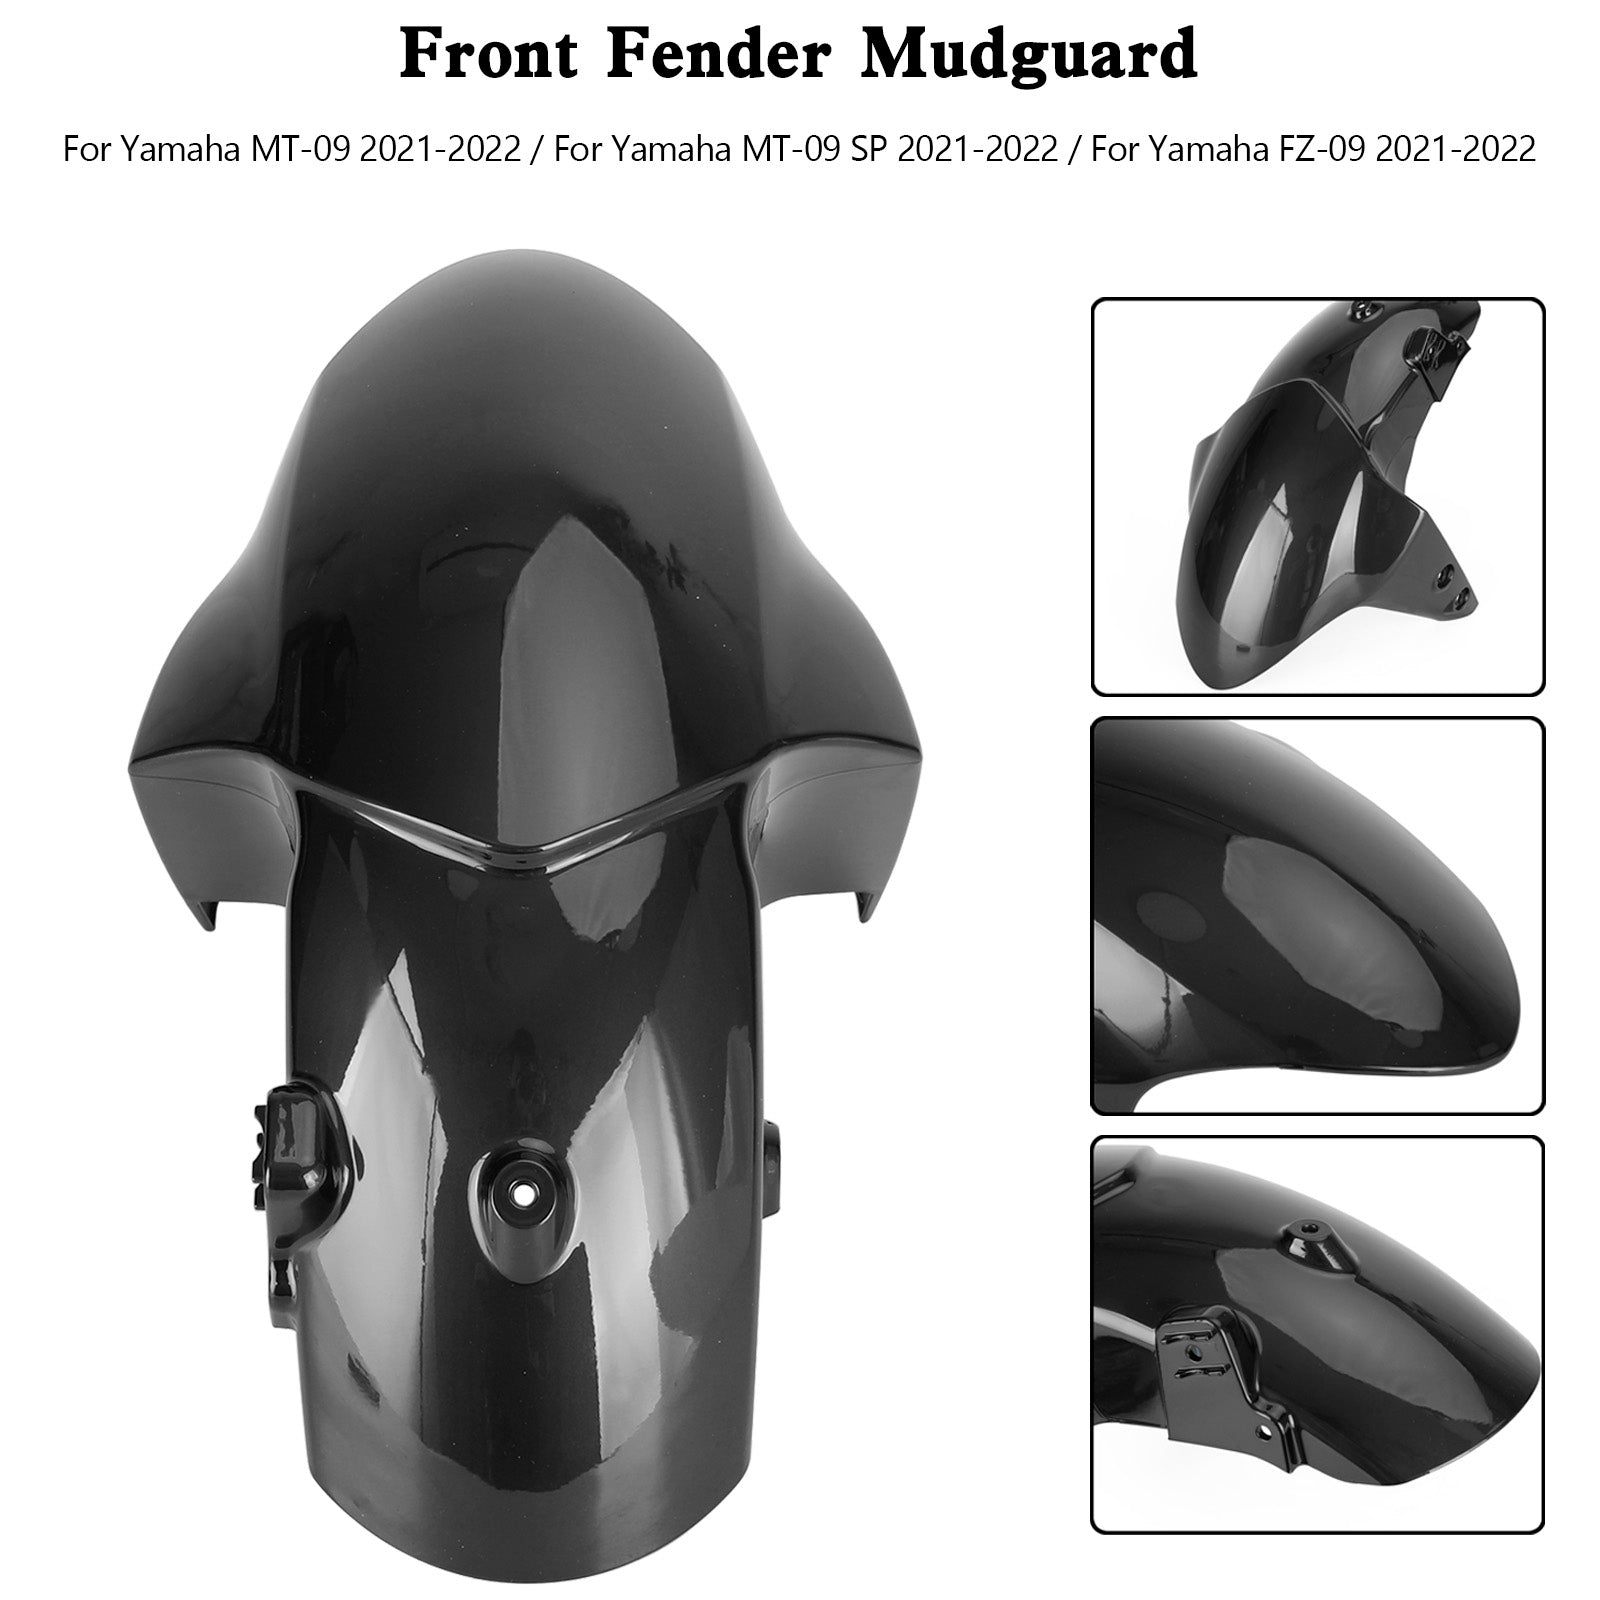 Front Fender Mudguard Fairing For Yamaha MT-09 FZ-09 MT09 SP 2021-2022